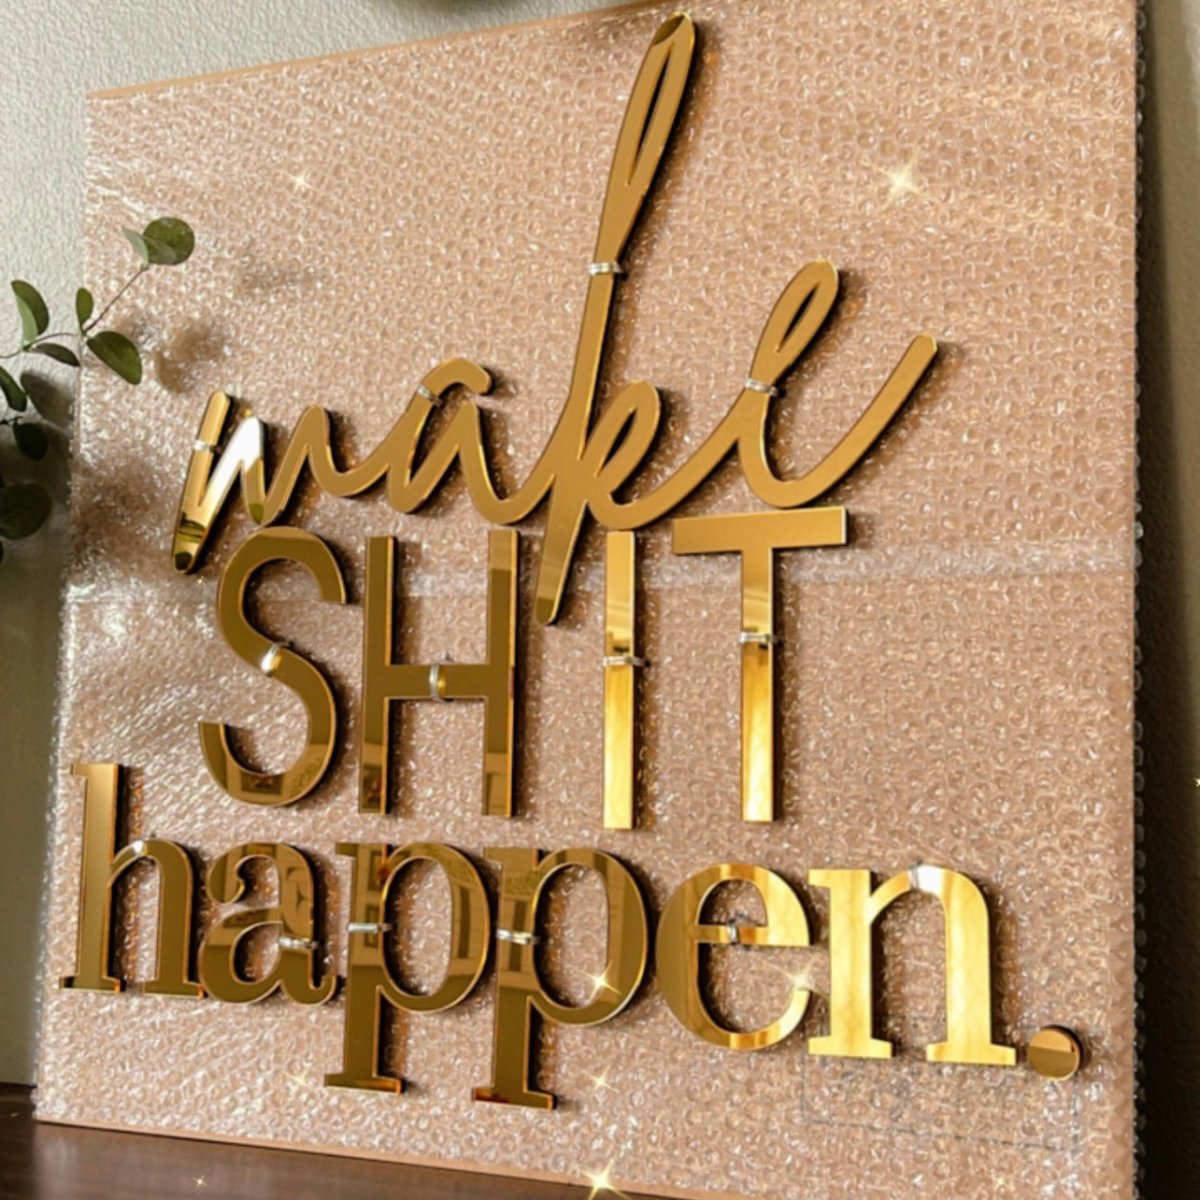 Make Shit Happen Bathroom Sign, Wood or Acrylic - VividEditions